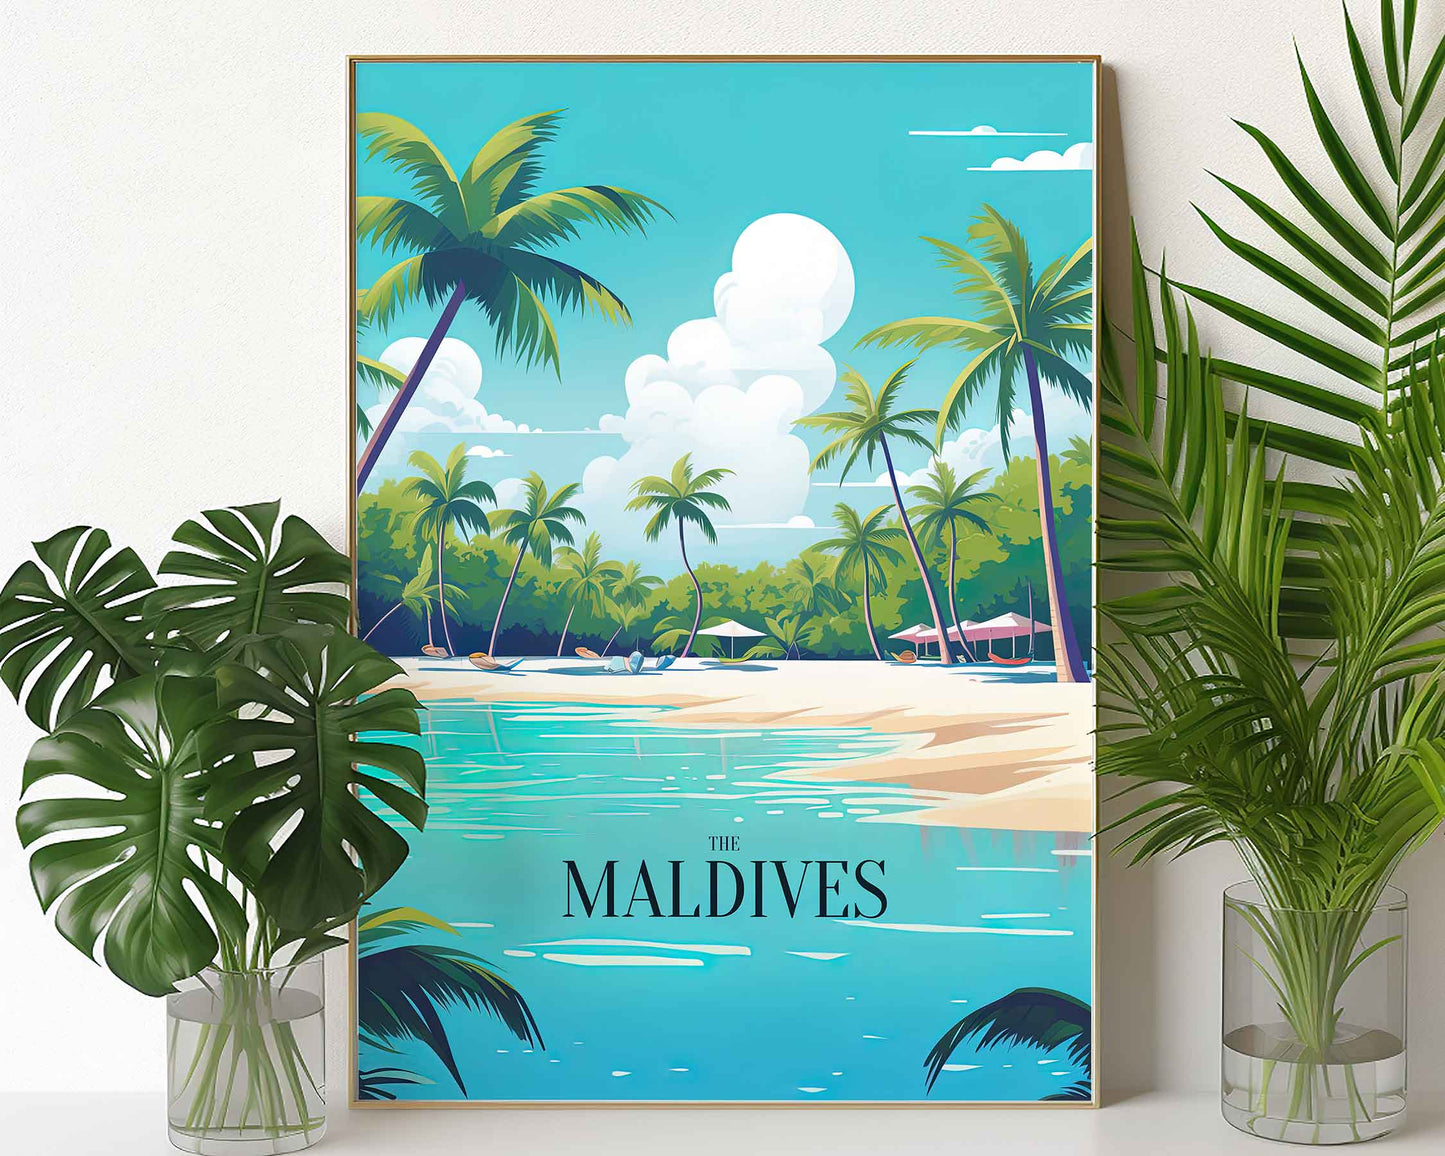 Framed Image of Maldives Travel Posters Illustration Wall Art Tropical Prints